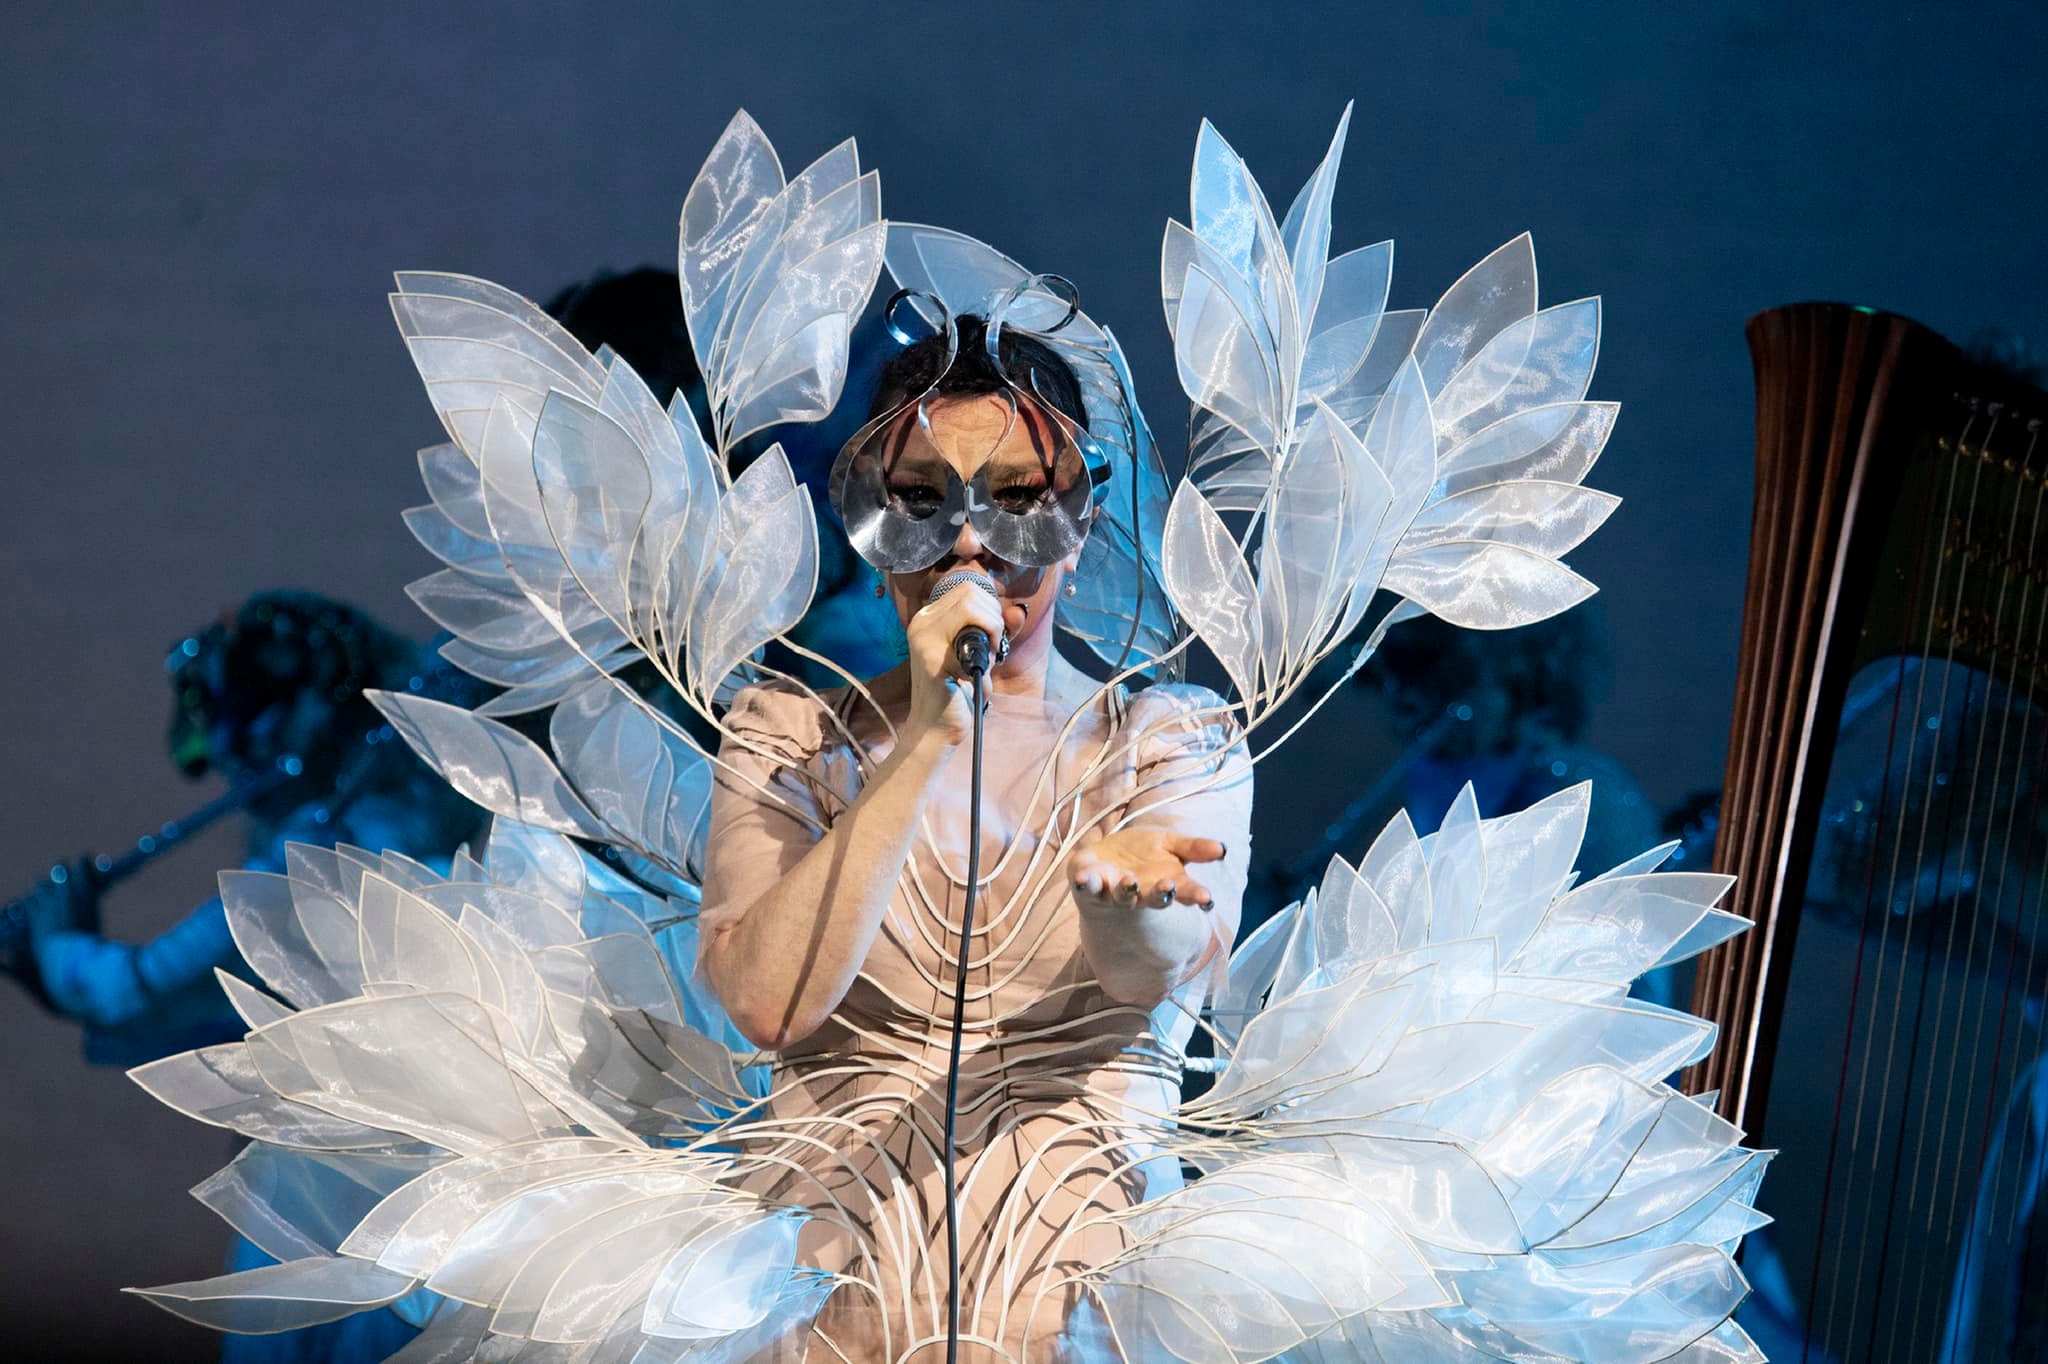 Björk Concert Shrine Auditorium 2022